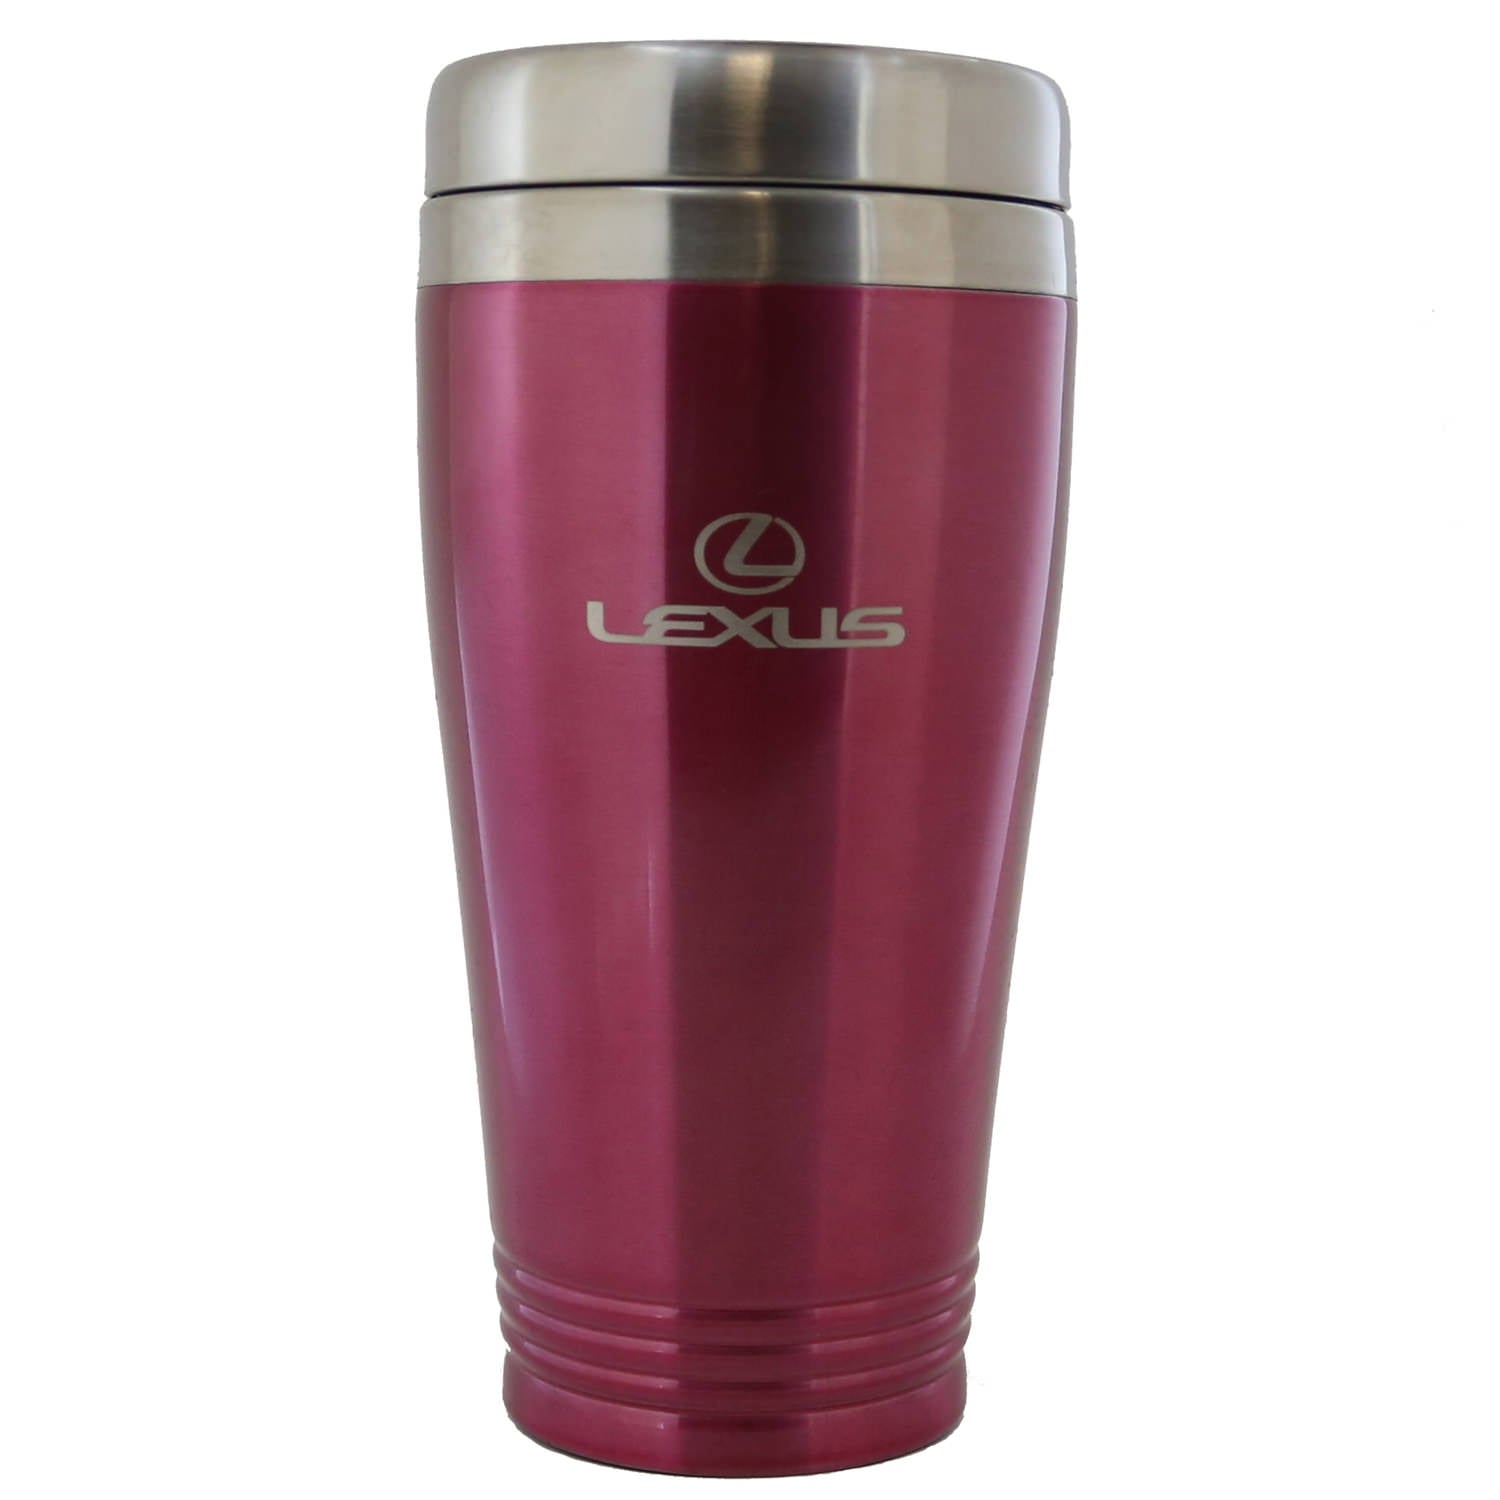 Lexus Travel Coffee Mug